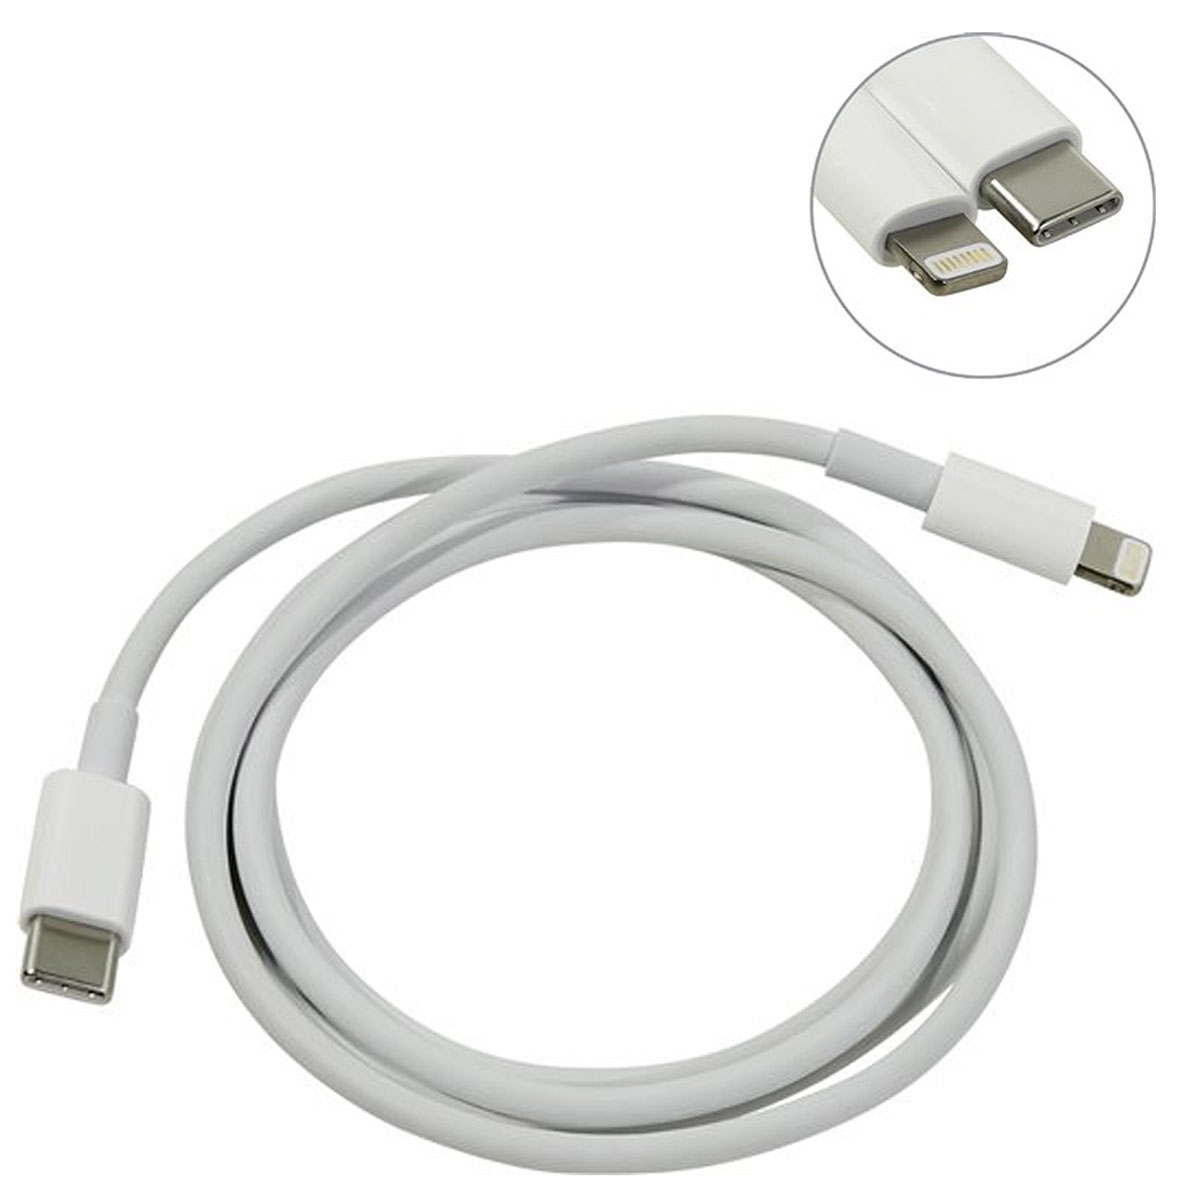 Кабель Type-C aka USB-C Foxconn A1703 на APPLE Lightning 8-pin, длина 1 метр, оригинал, цвет белый